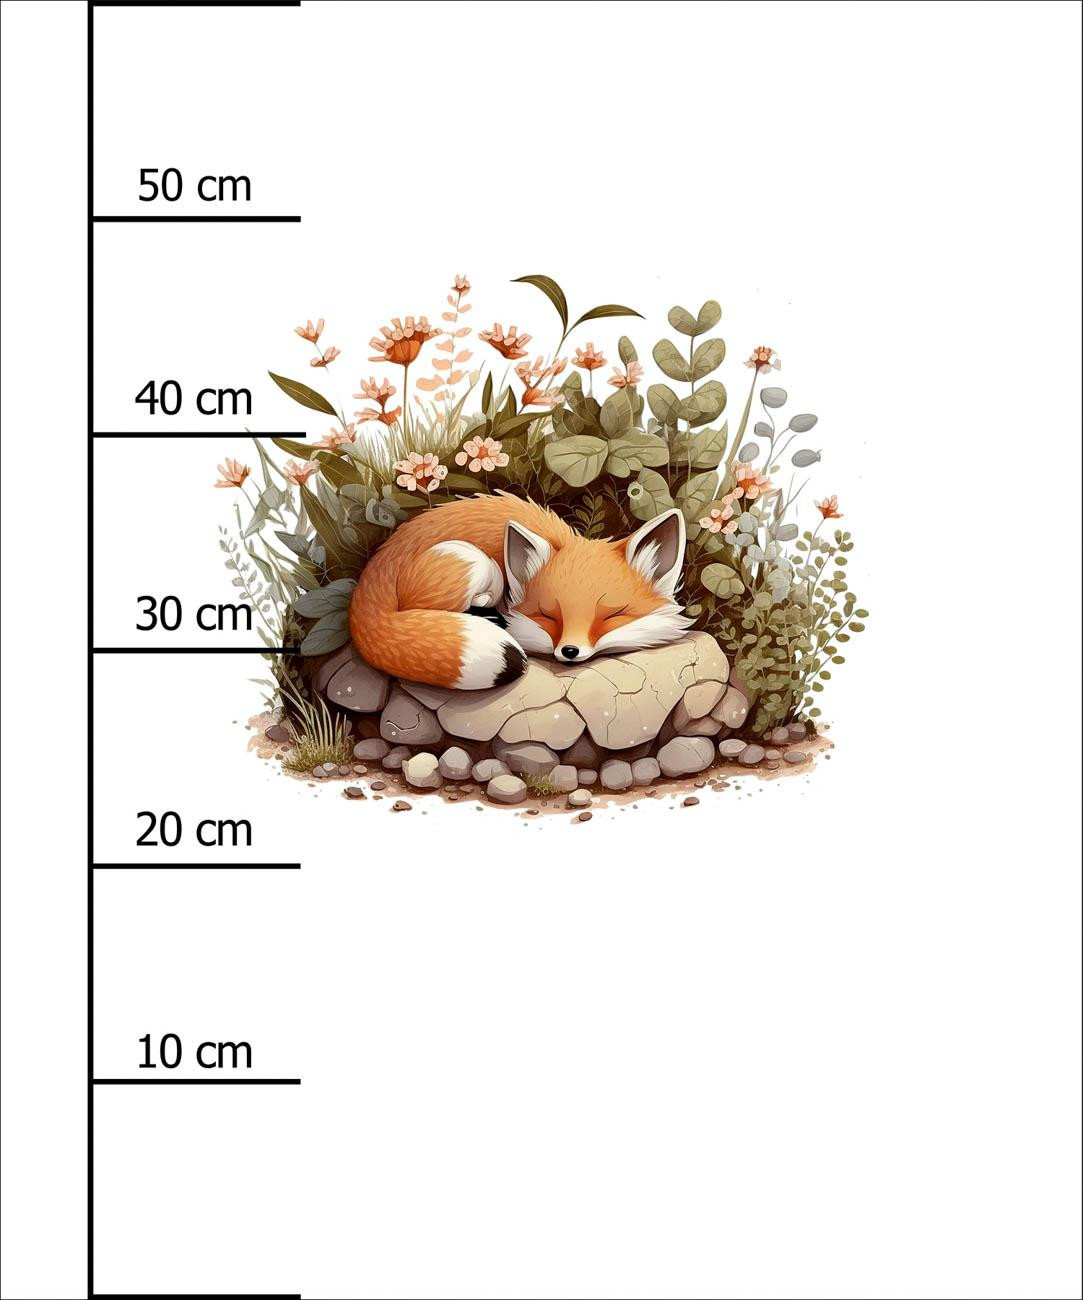 SLEEPING FOX - PANEL (60cm x 50cm) tkanina wodoodporna